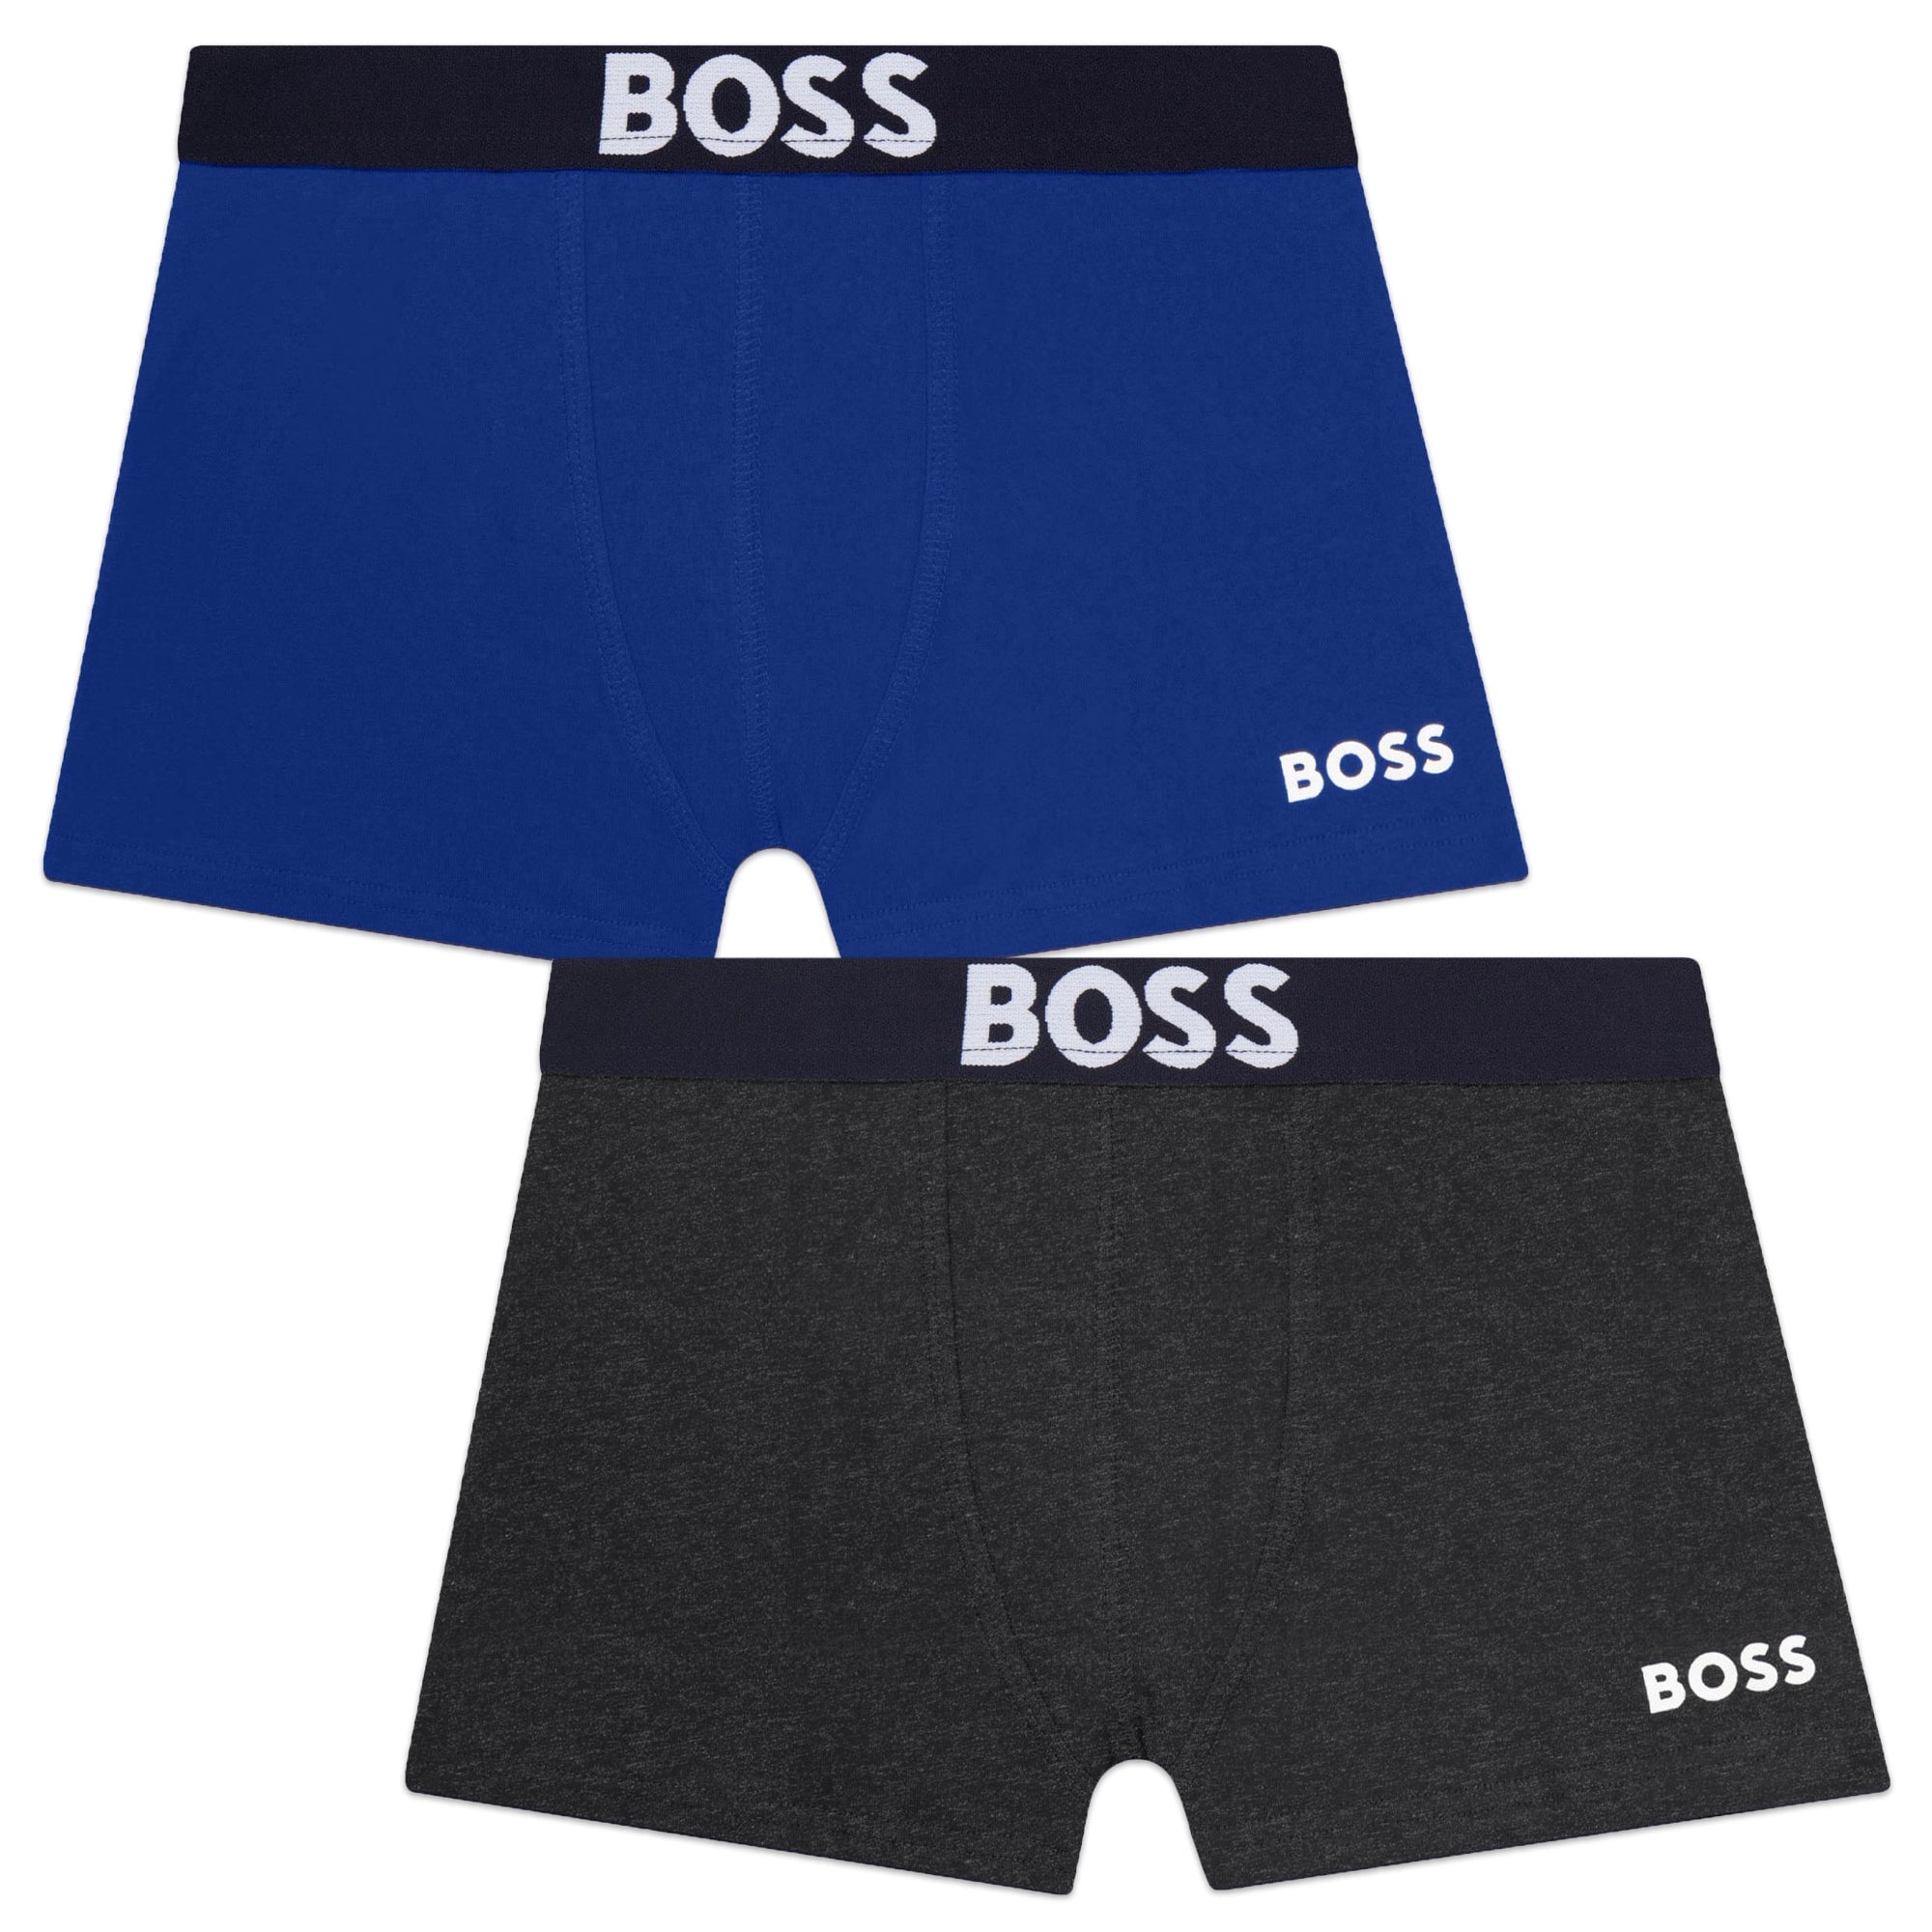 Boss Set Of 2 Boxer Shorts - Pale Blue